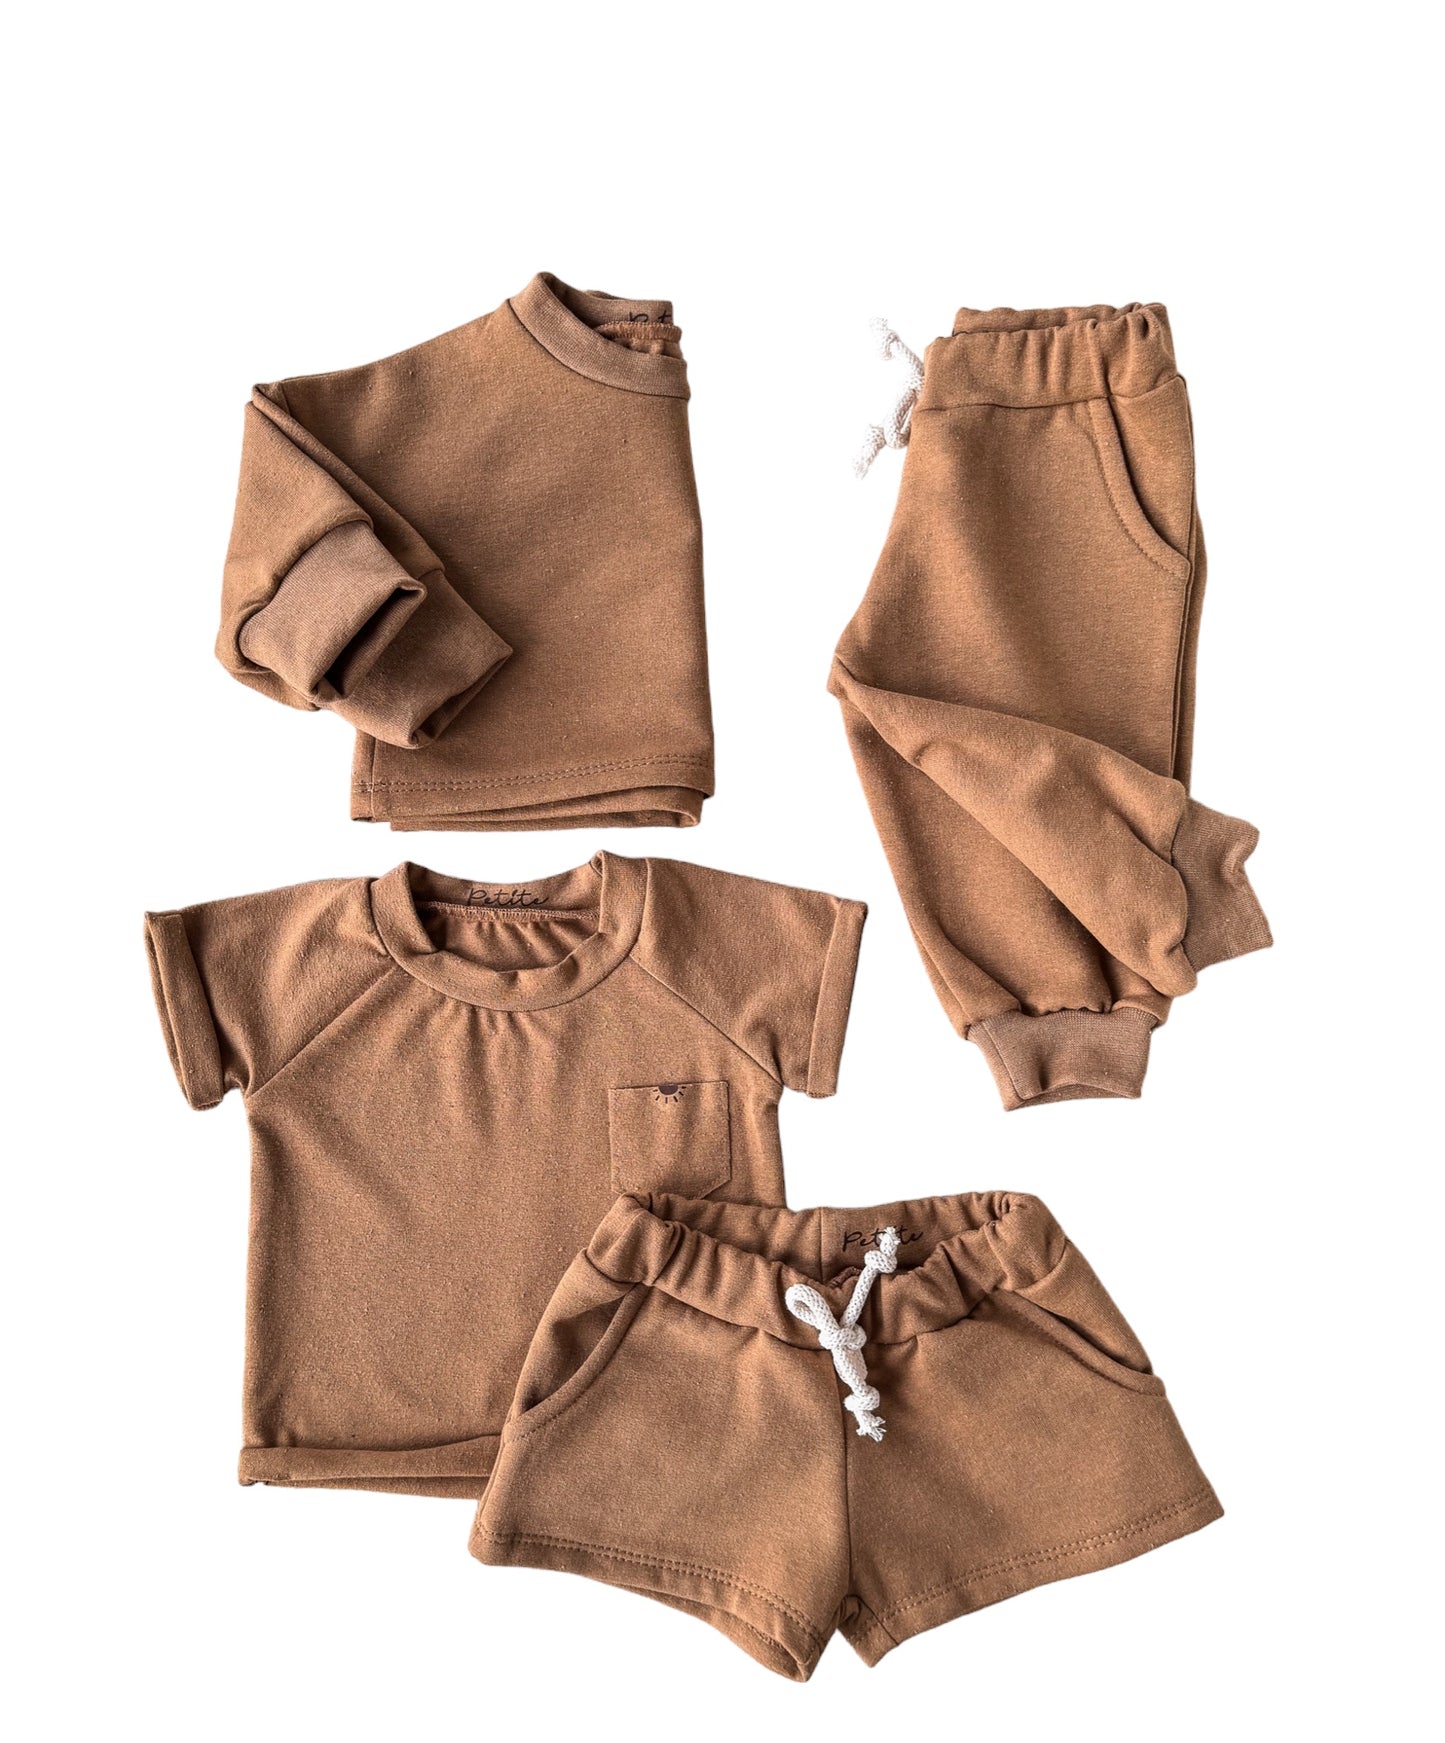 Recycled cotton set / sweater + shorts + t-shirt + shorts / caramel